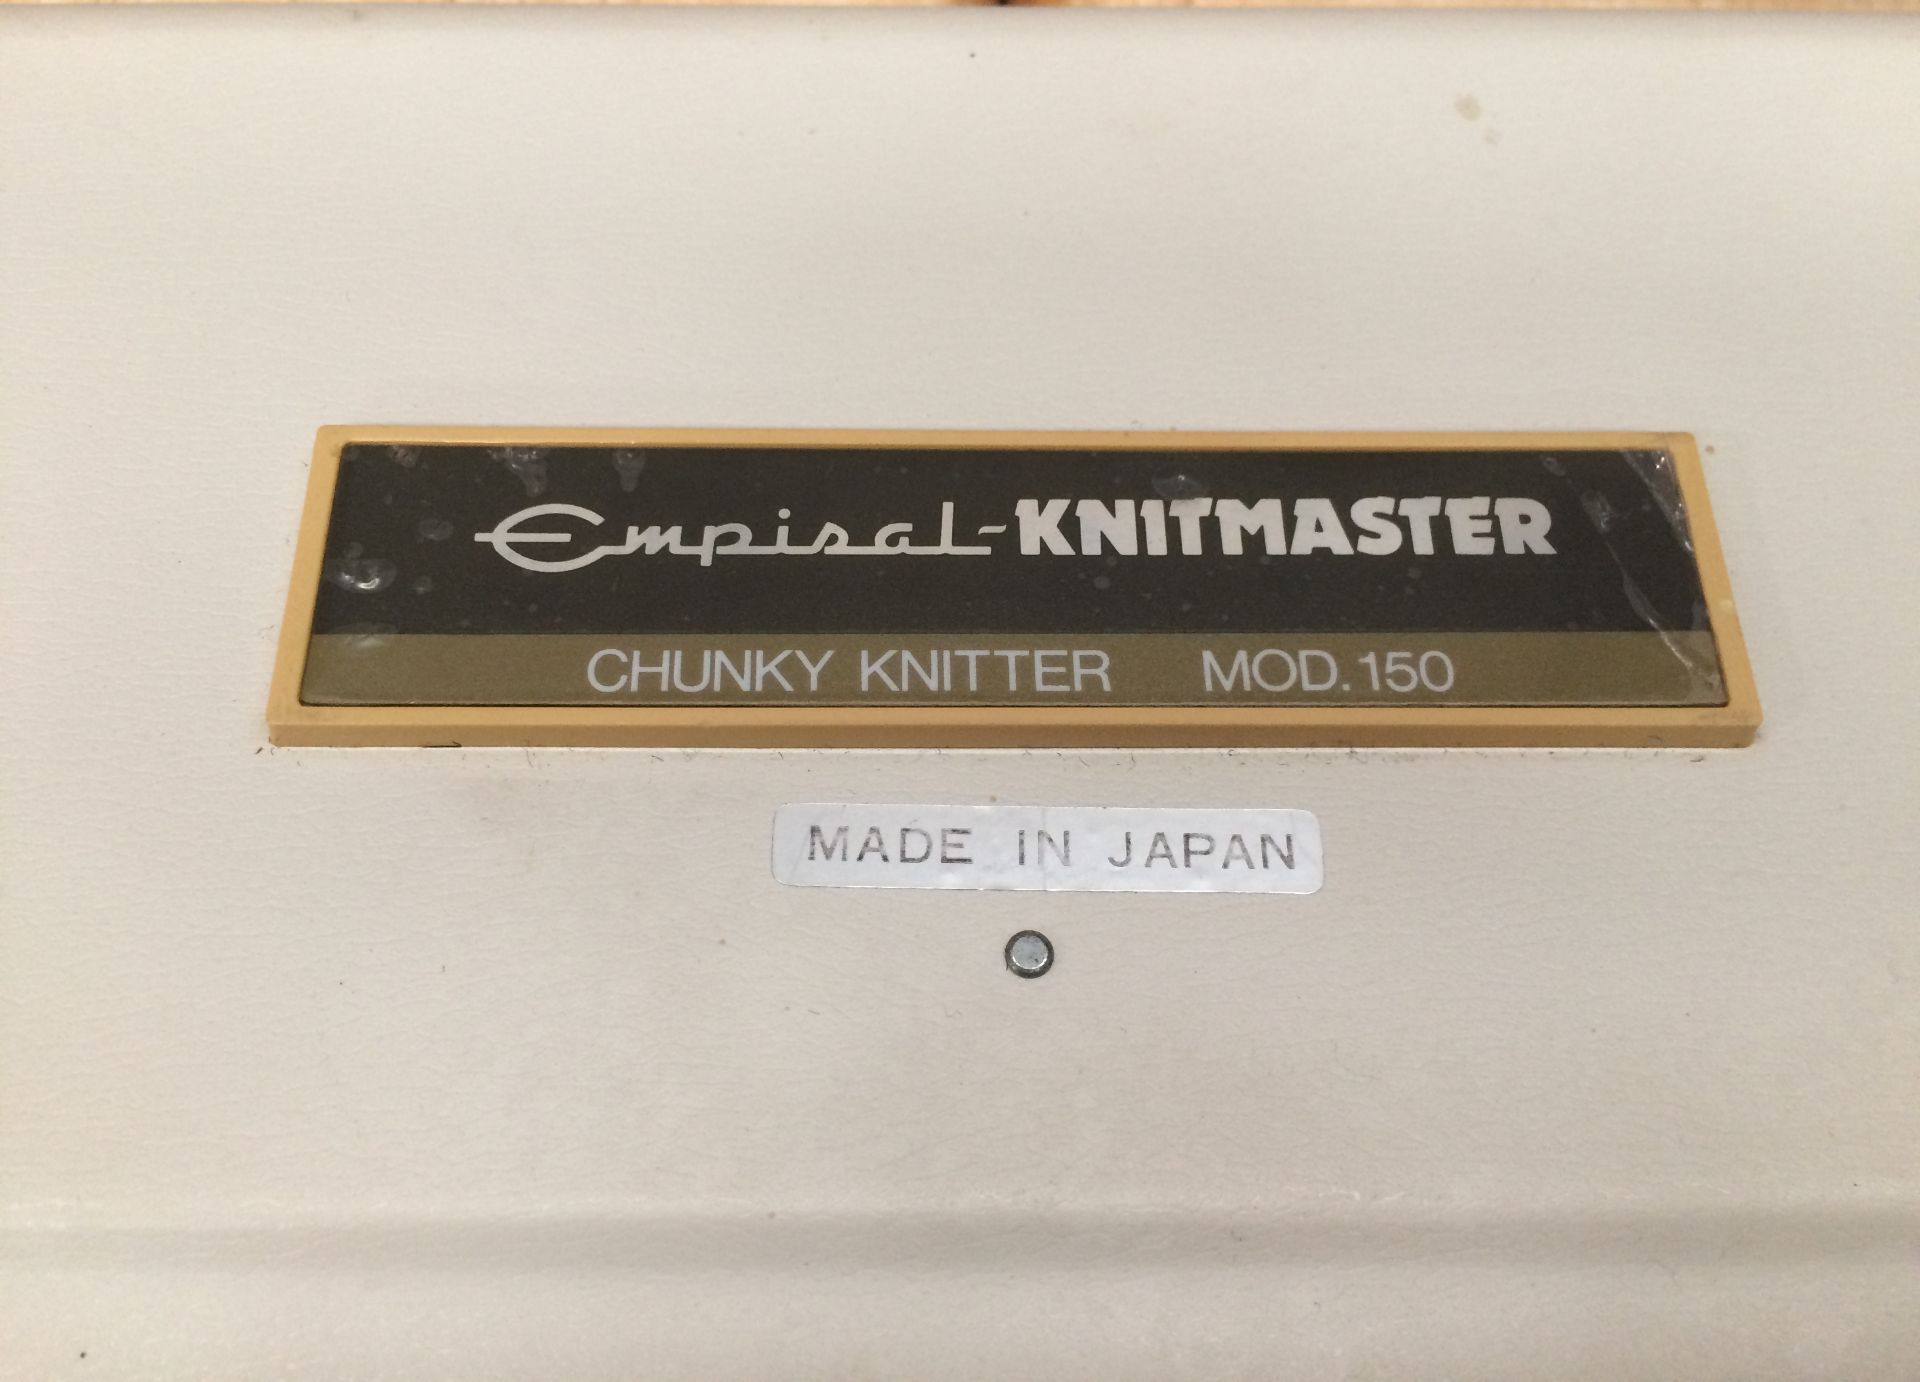 An Empisal Knitmaster portable chunky knitter model no: 150, serial no: 159678N, - Image 2 of 2